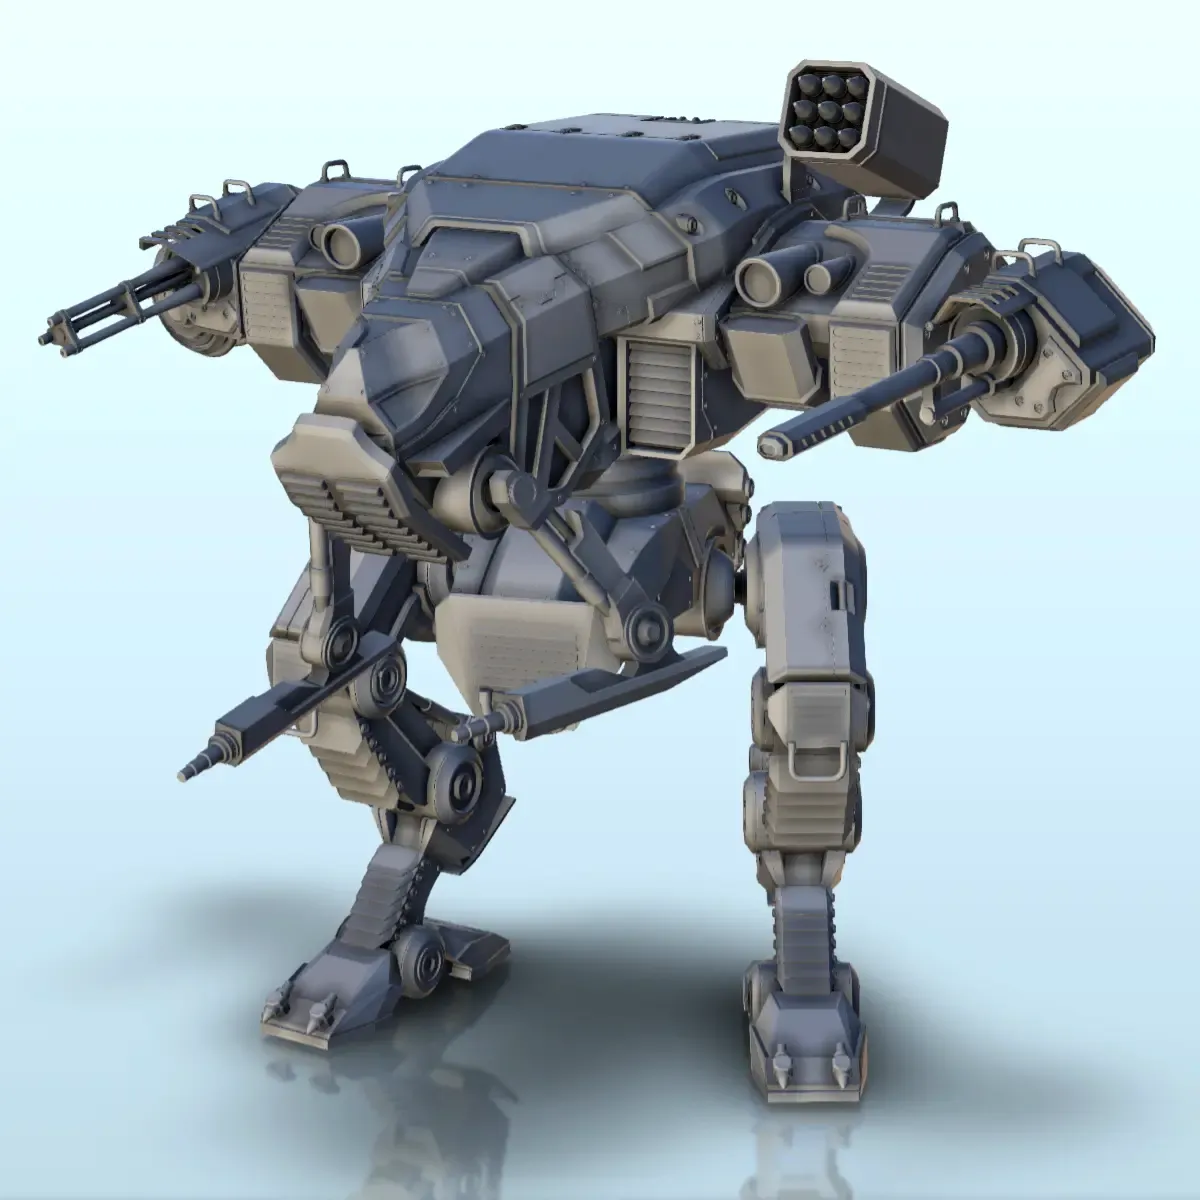 Xoren combat robot (8) - sci-fi science fiction future 40k b